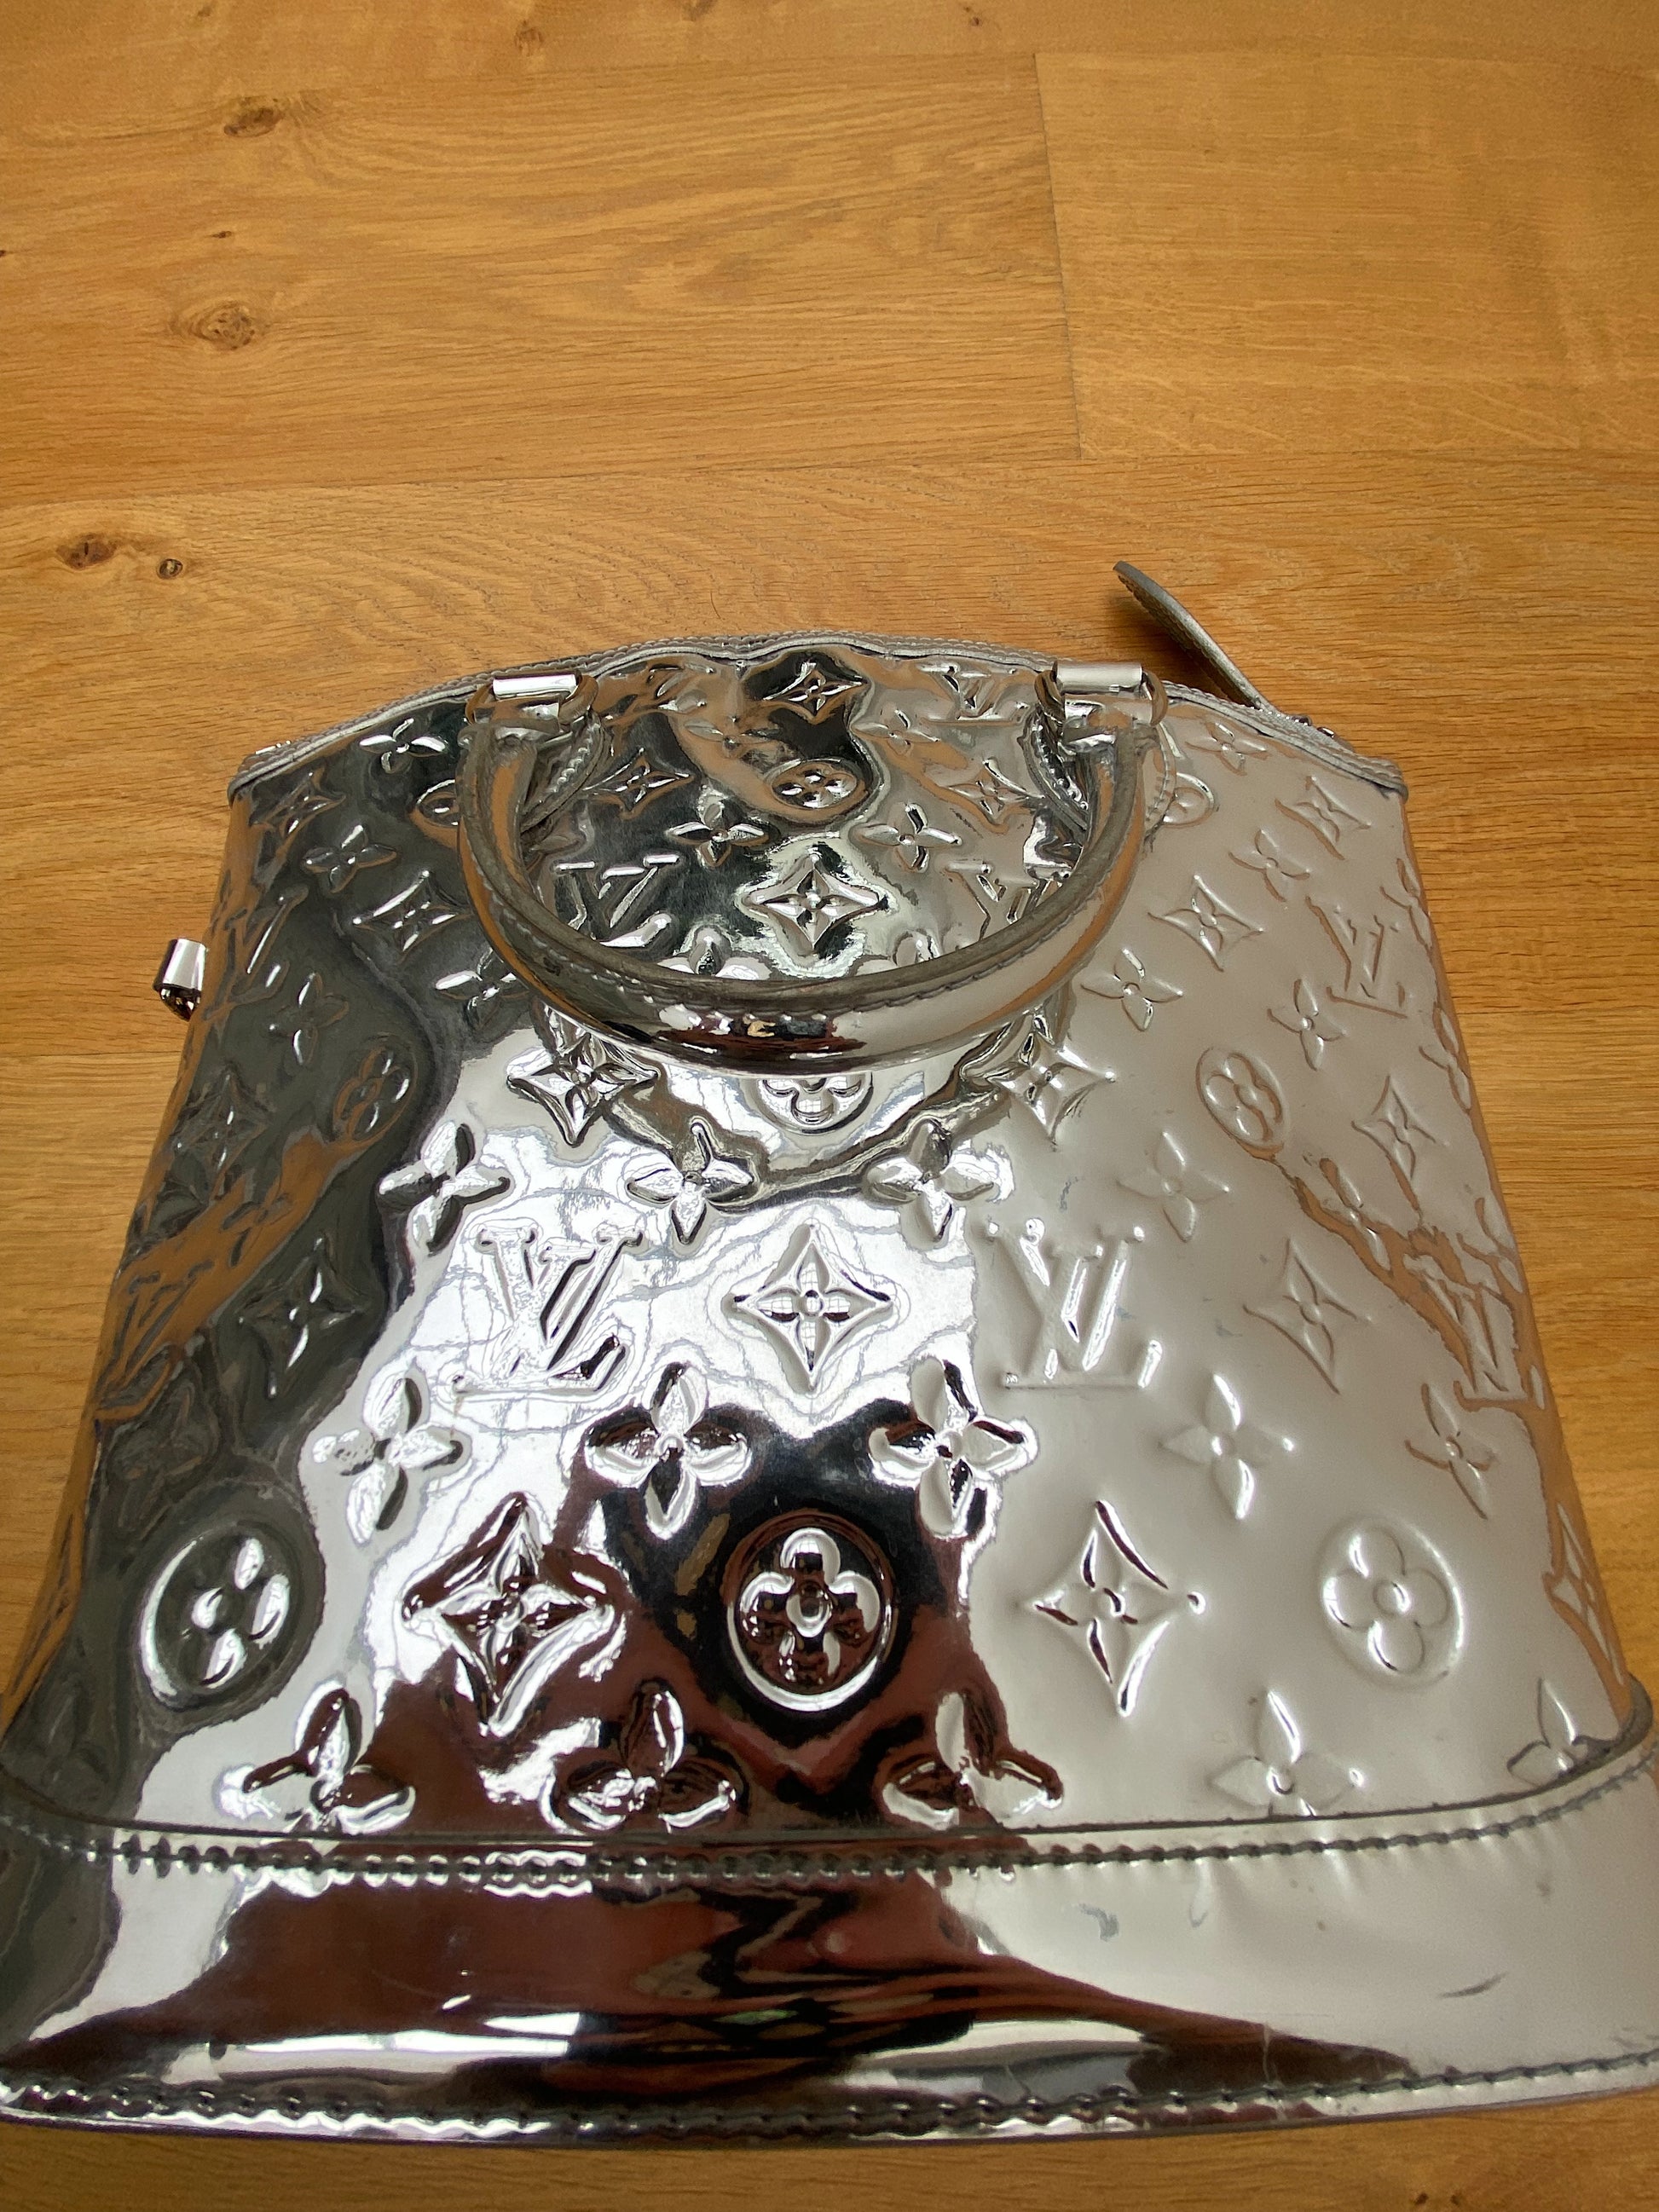 Louis Vuitton Lockit Handbag 374640